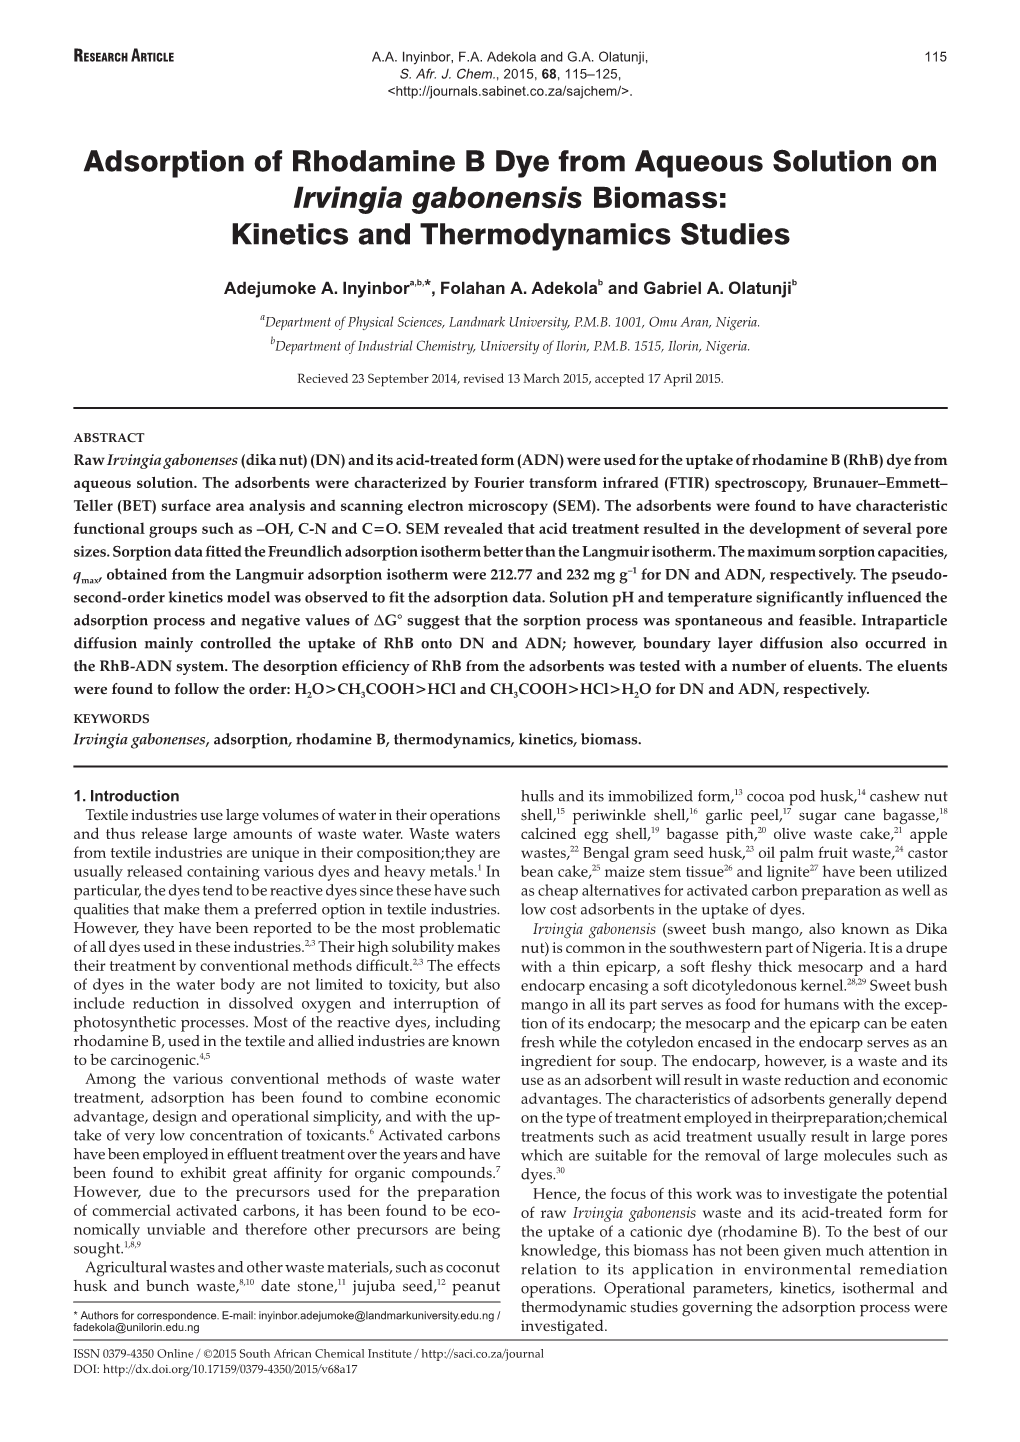 Adsorption of Rhodamine B Dye from Aqueous Solution on Irvingia Gabonensis Biomass: Kinetics and Thermodynamics Studies